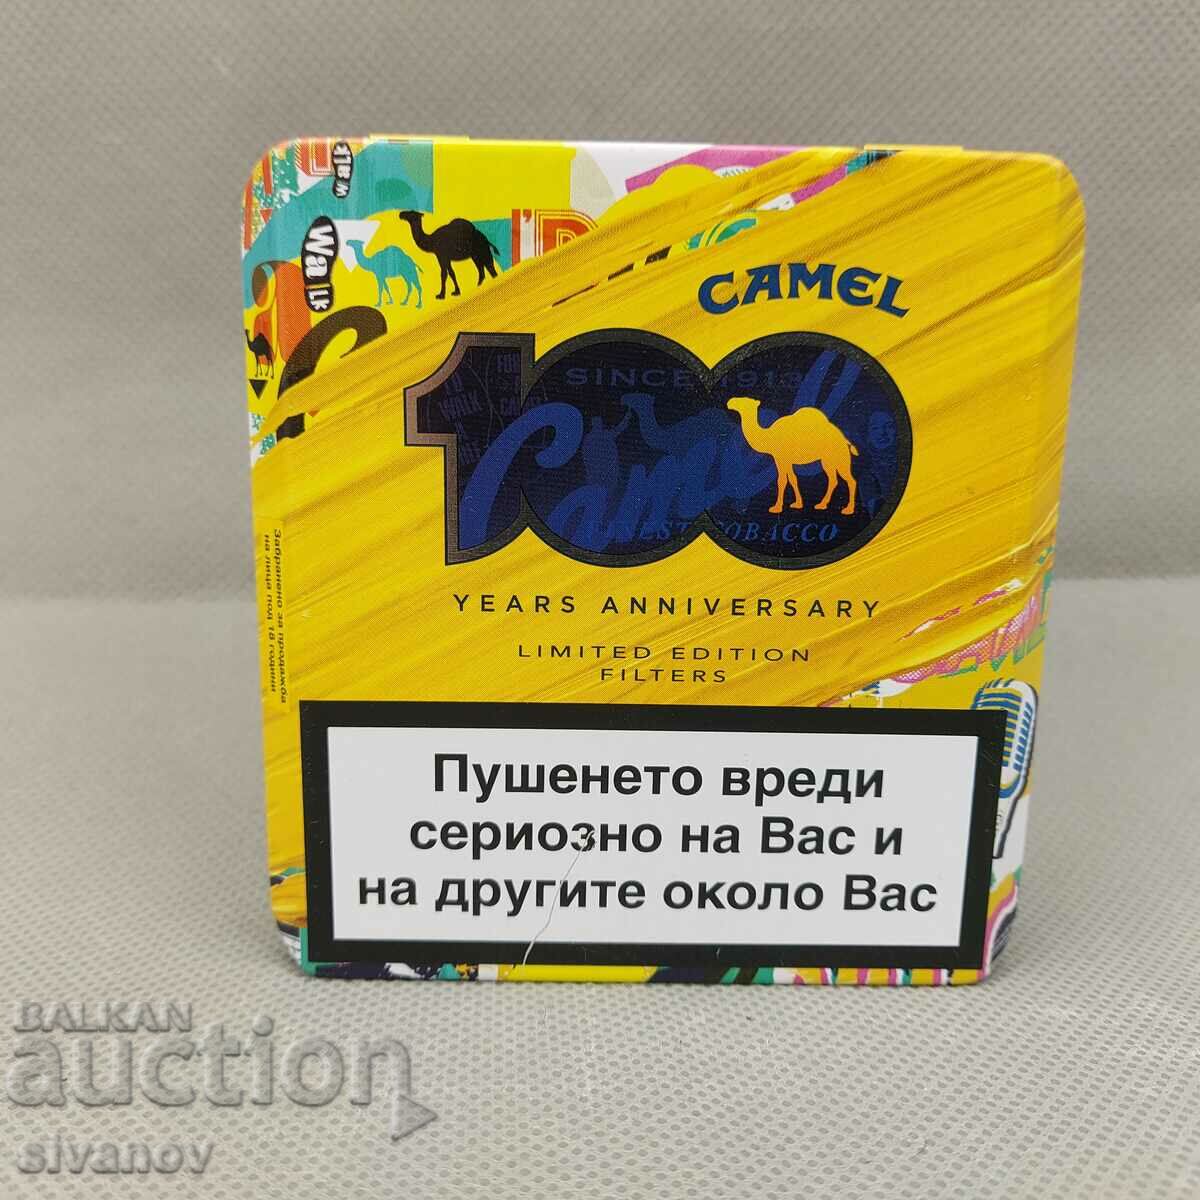 Camel cigarette tin box #0316